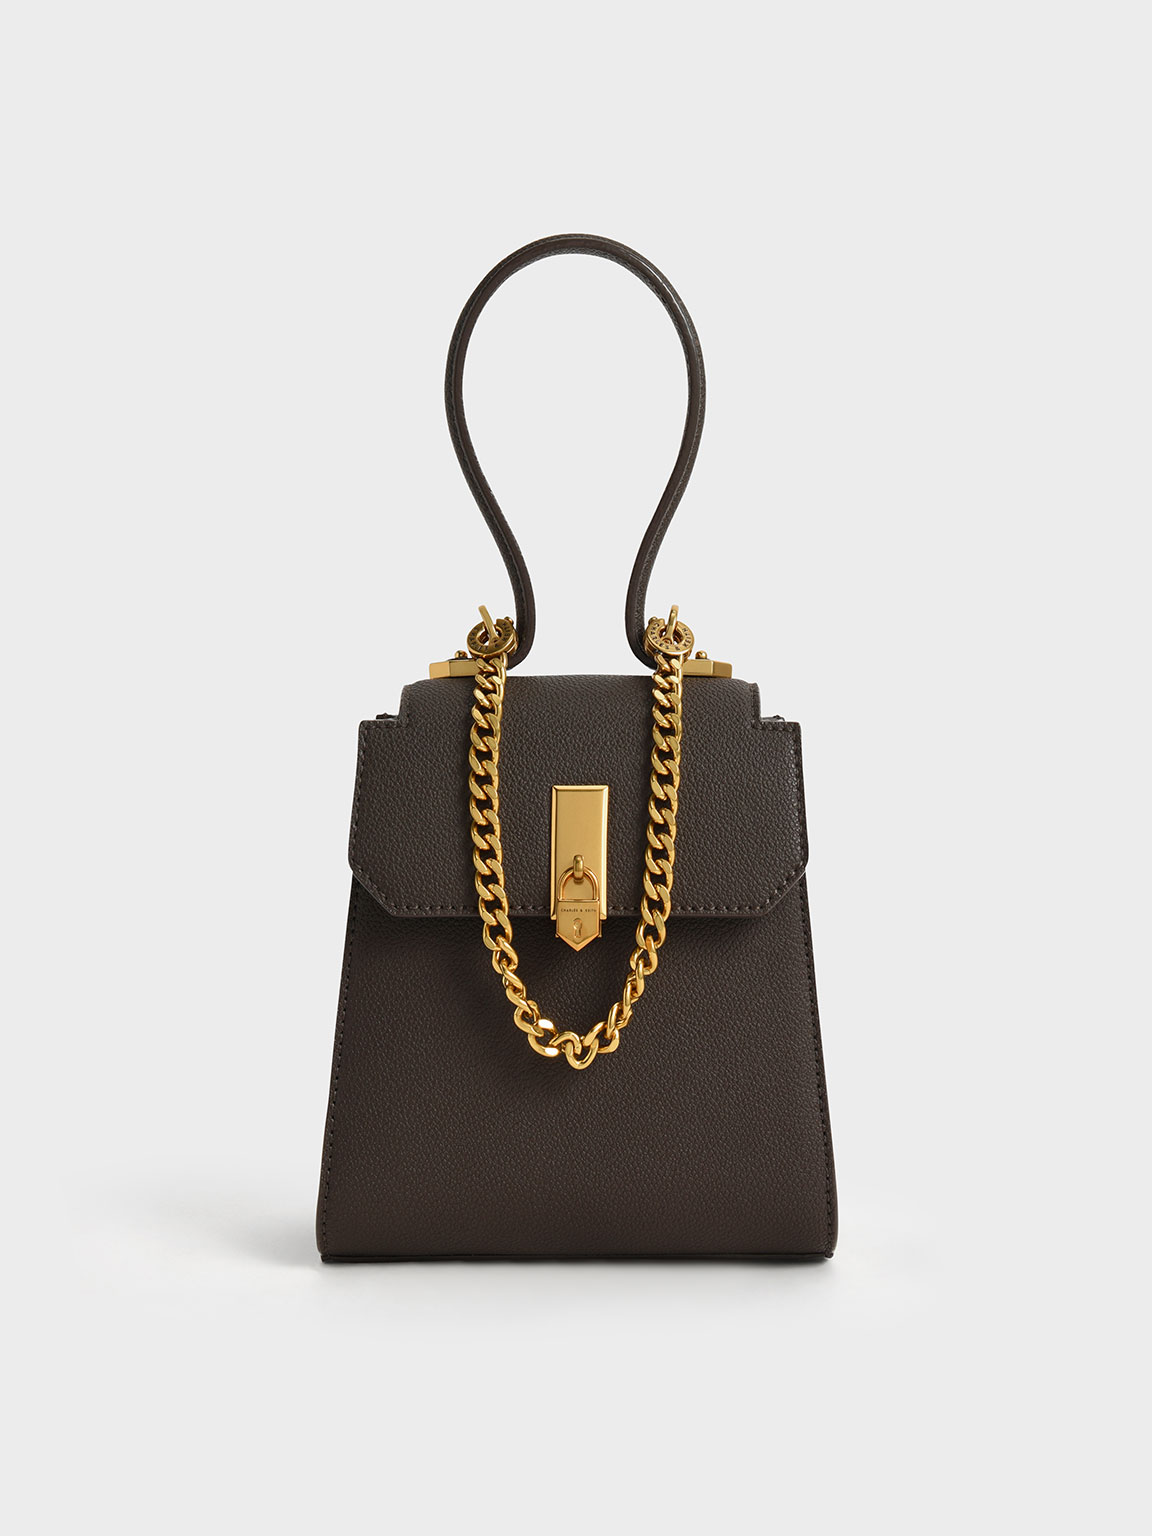 Balenciaga - Preloved Designer Handbags & Shoes - Love that Bag etc